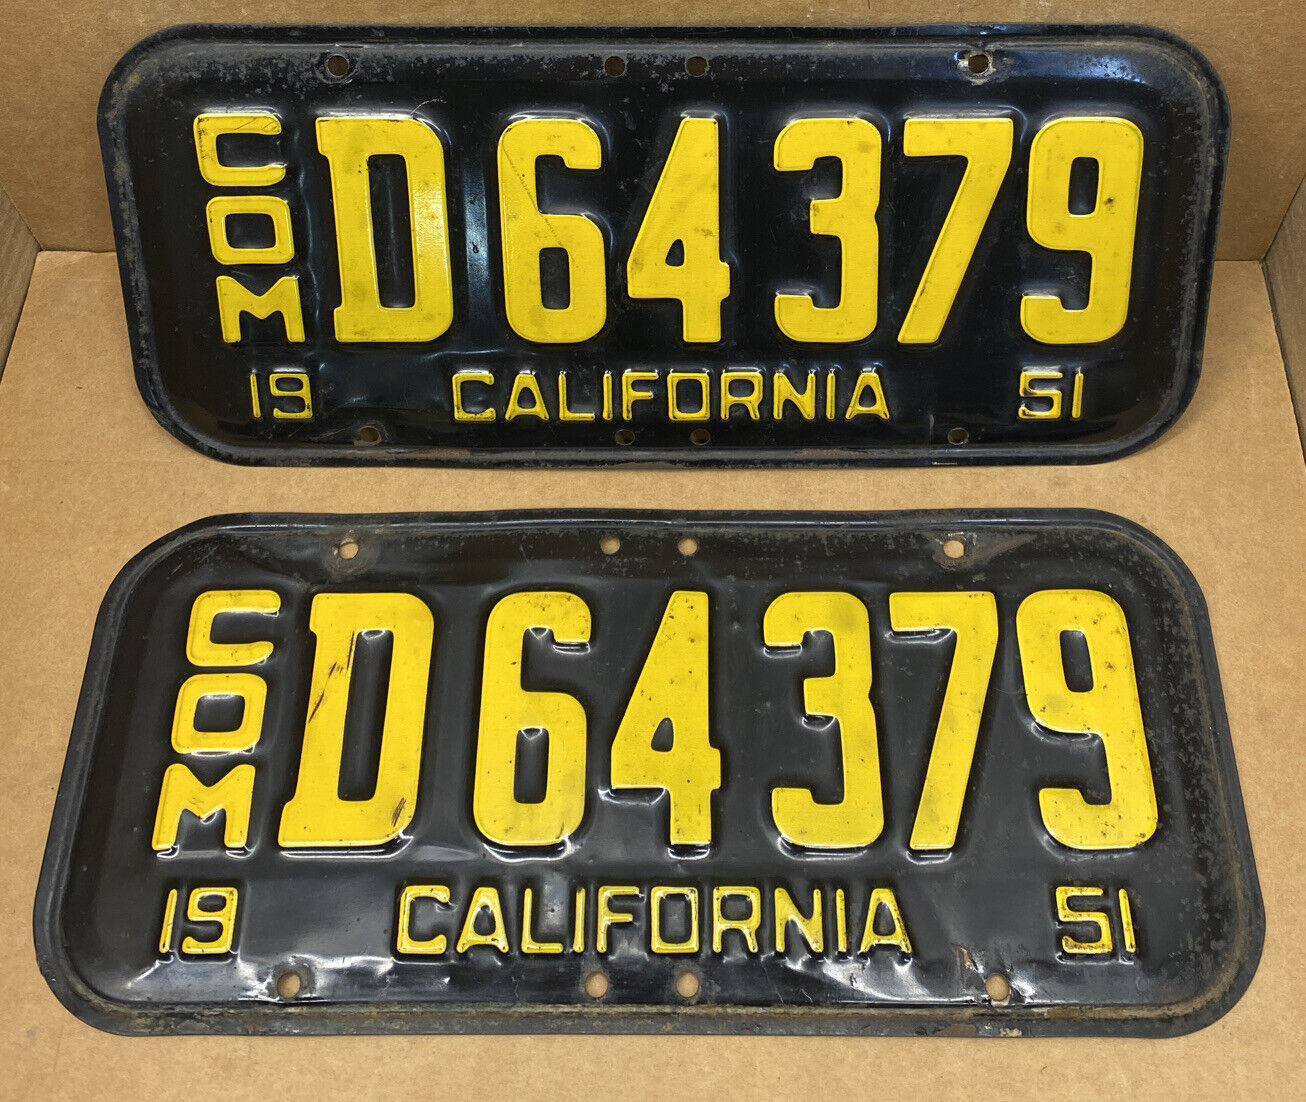 RARE 1951 TRUCK-COMMERCIAL D 64379 (CALIFORNIA)  LICENSE PLATE. DMV CLEARED